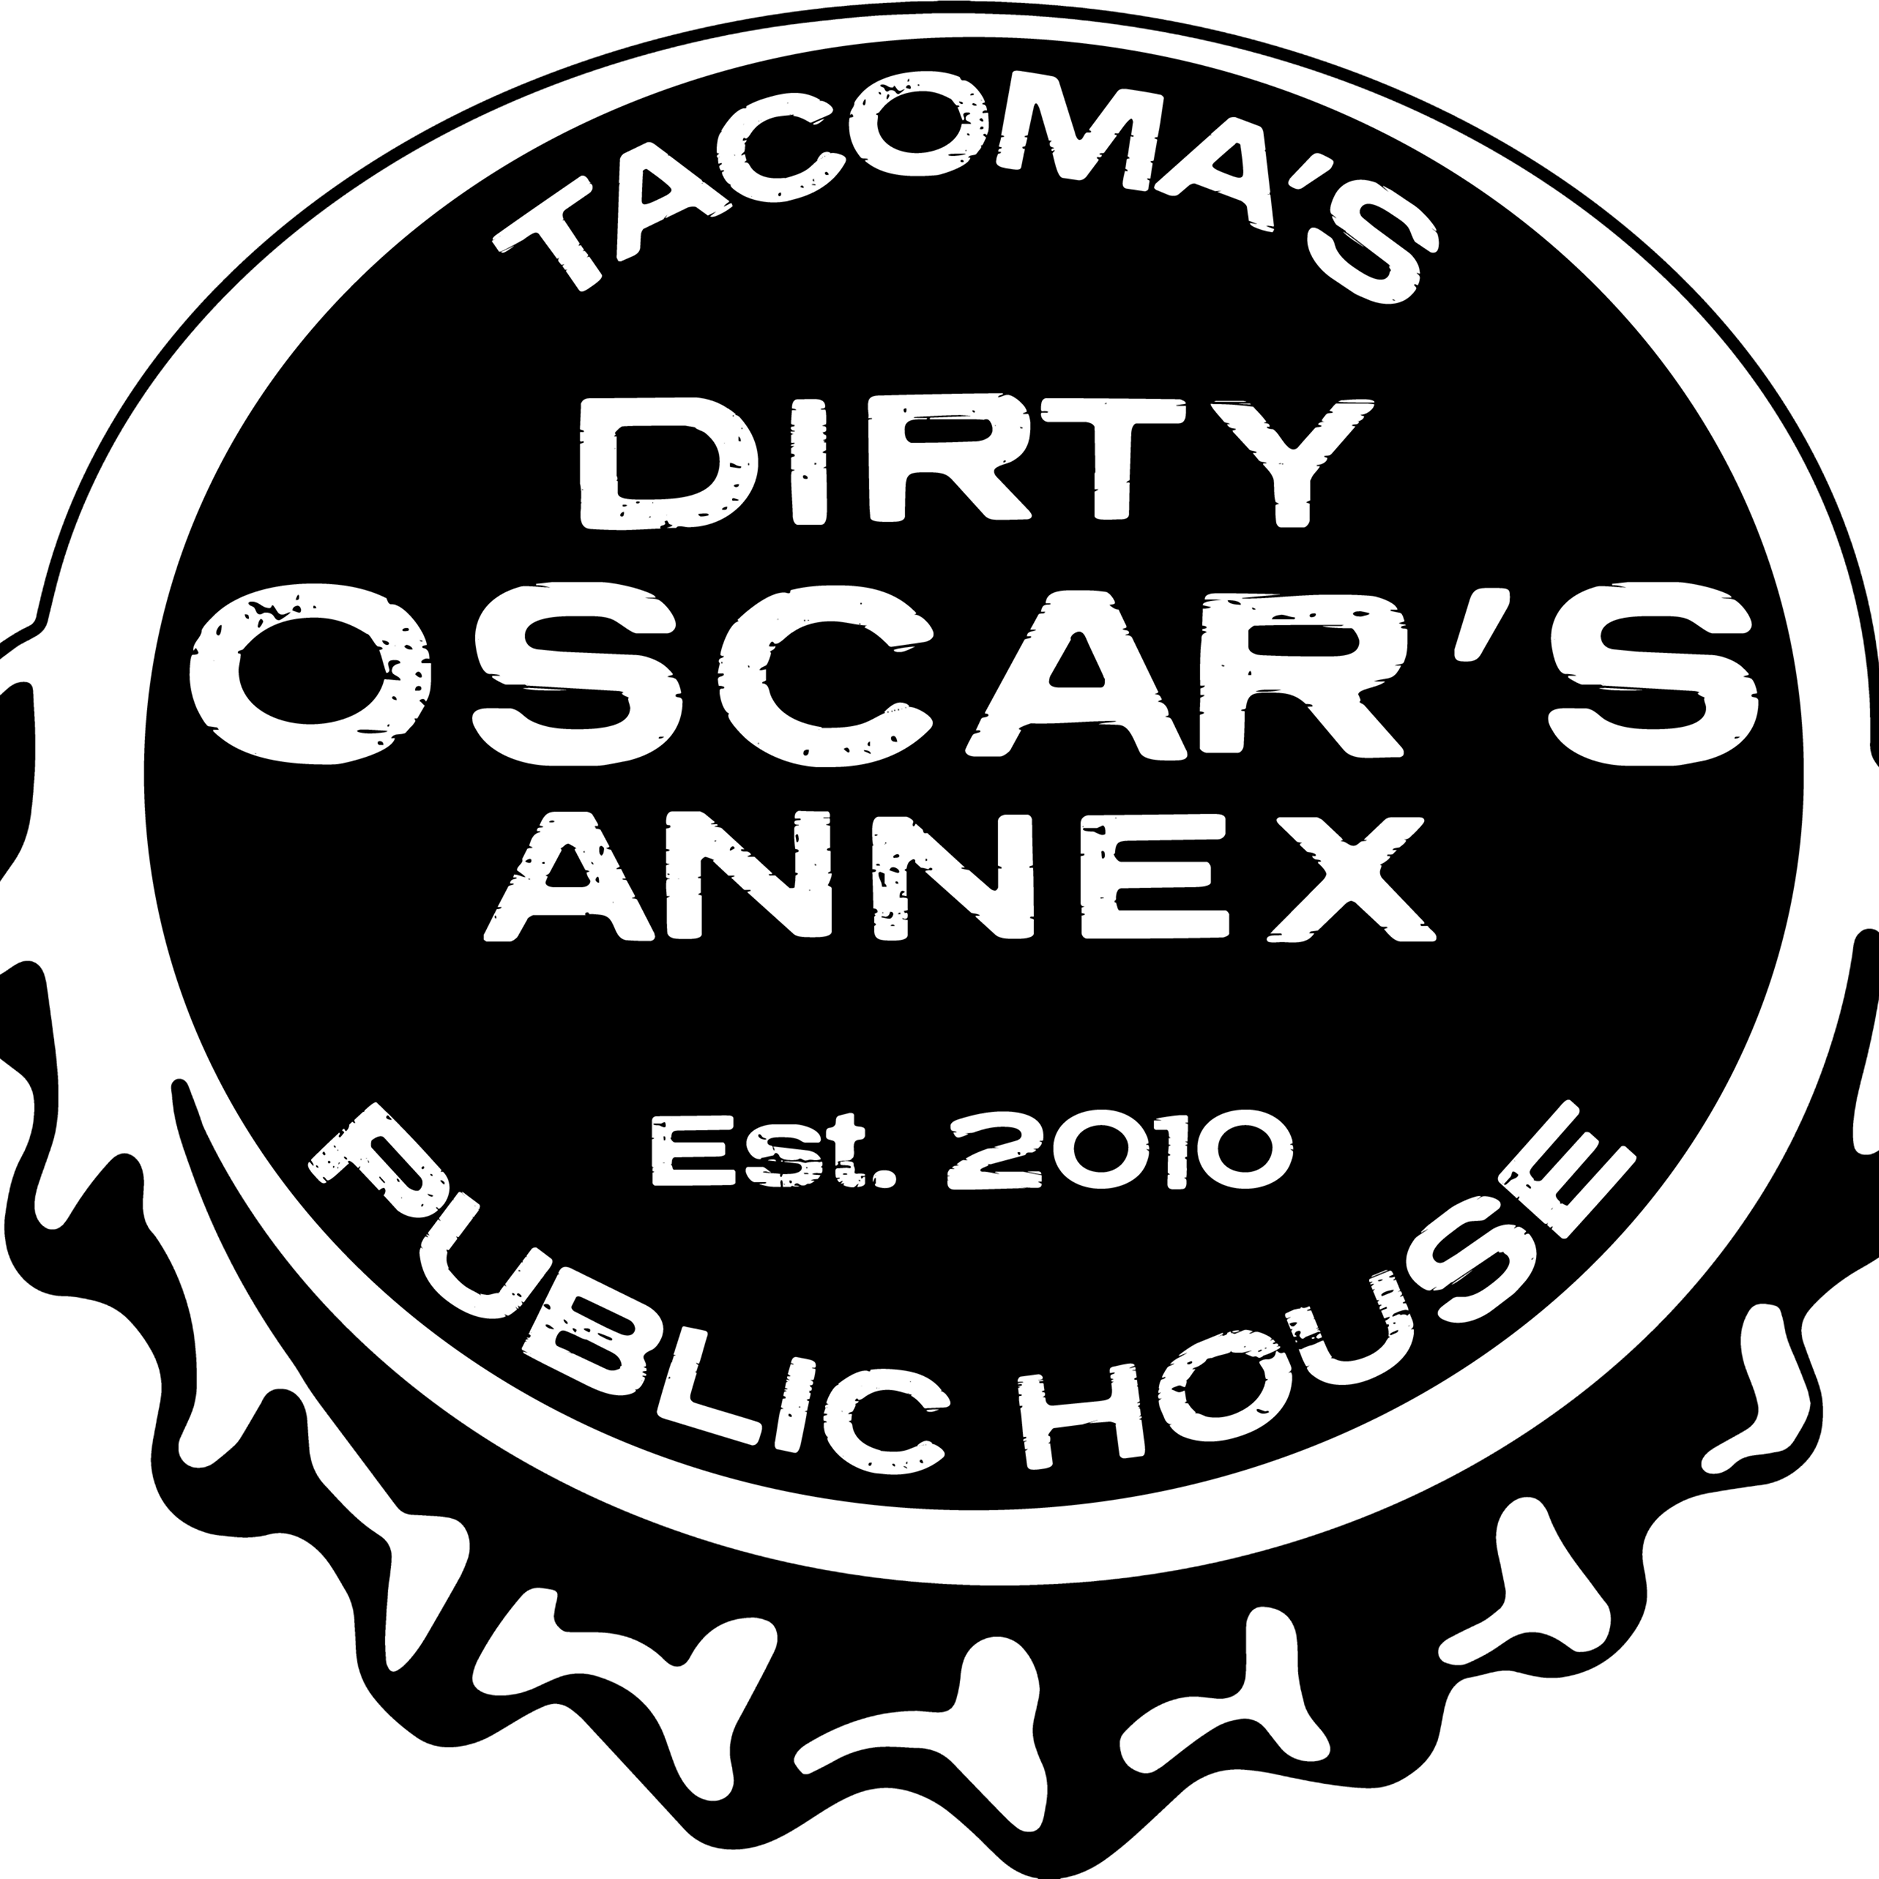 Dirty Oscar’s Annex